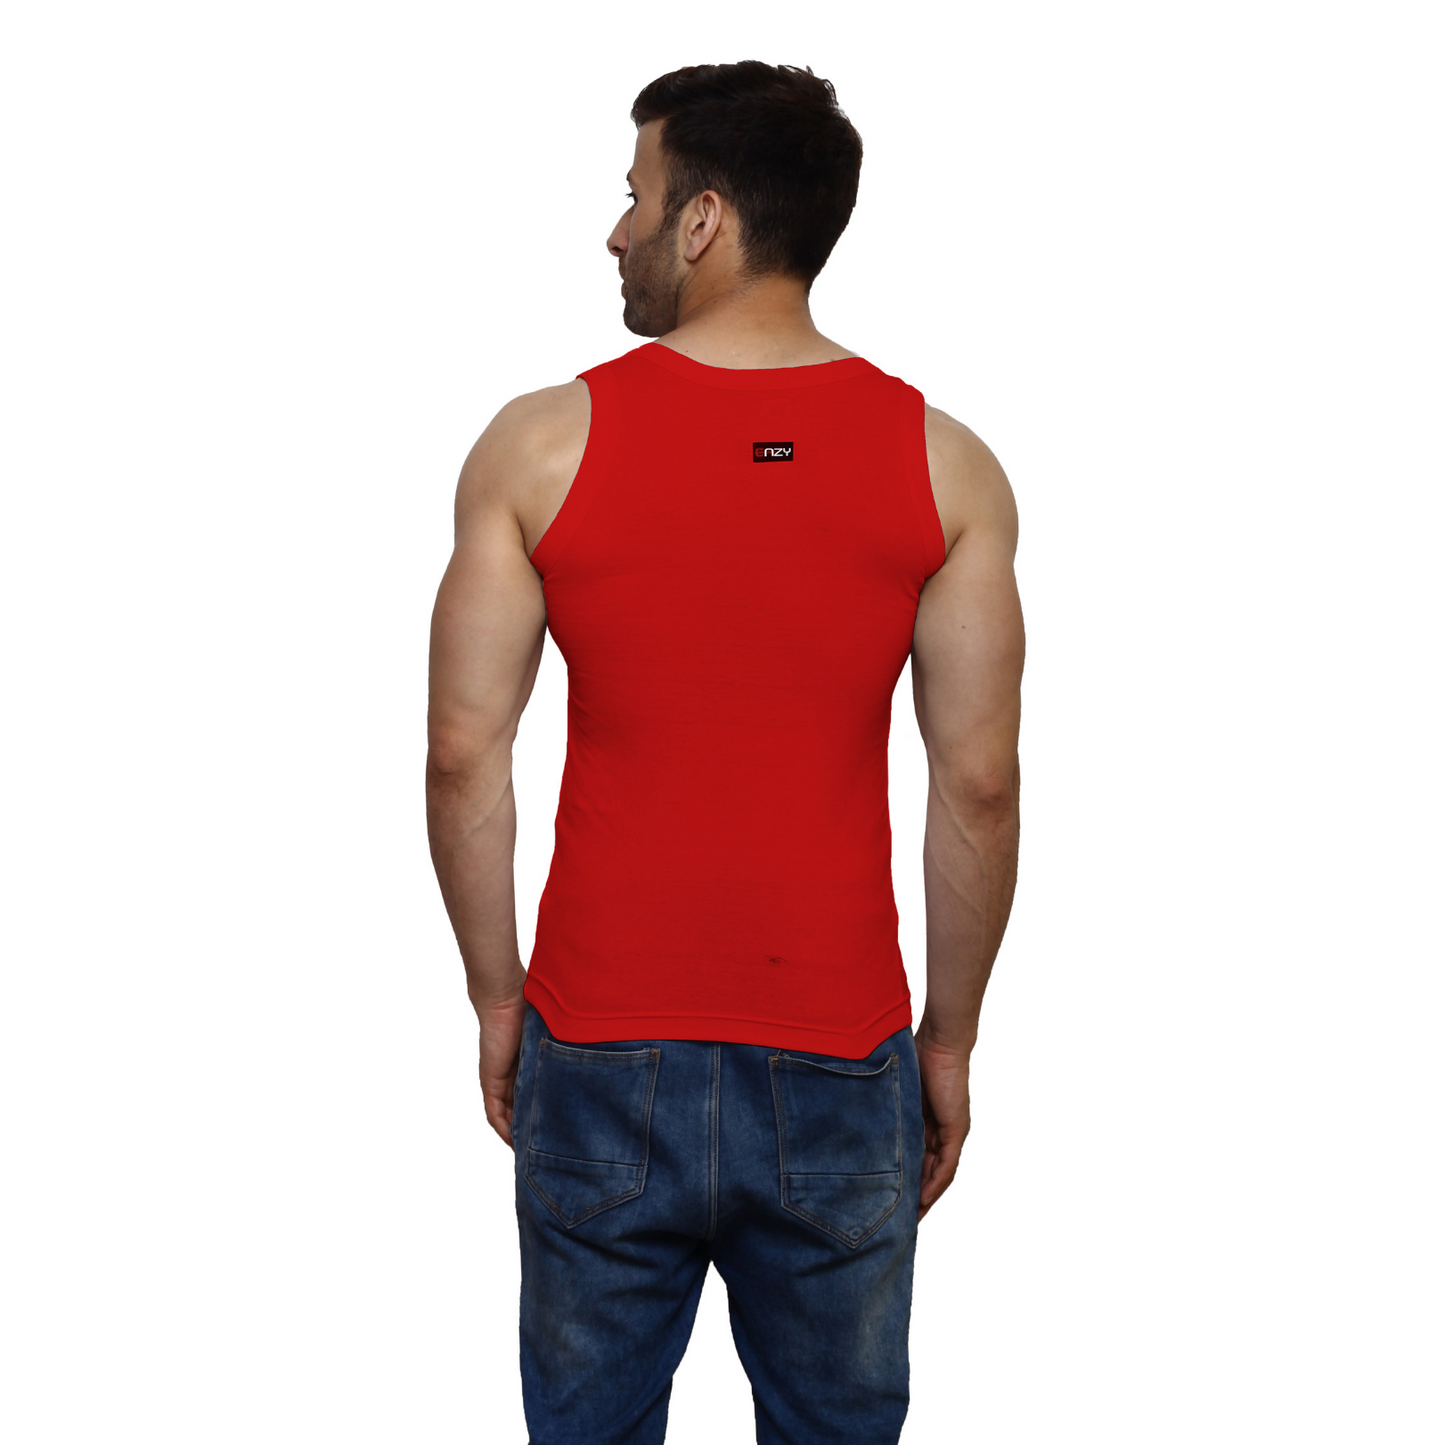 Sirtex Eazy Vest 2041 (Pack of 2)